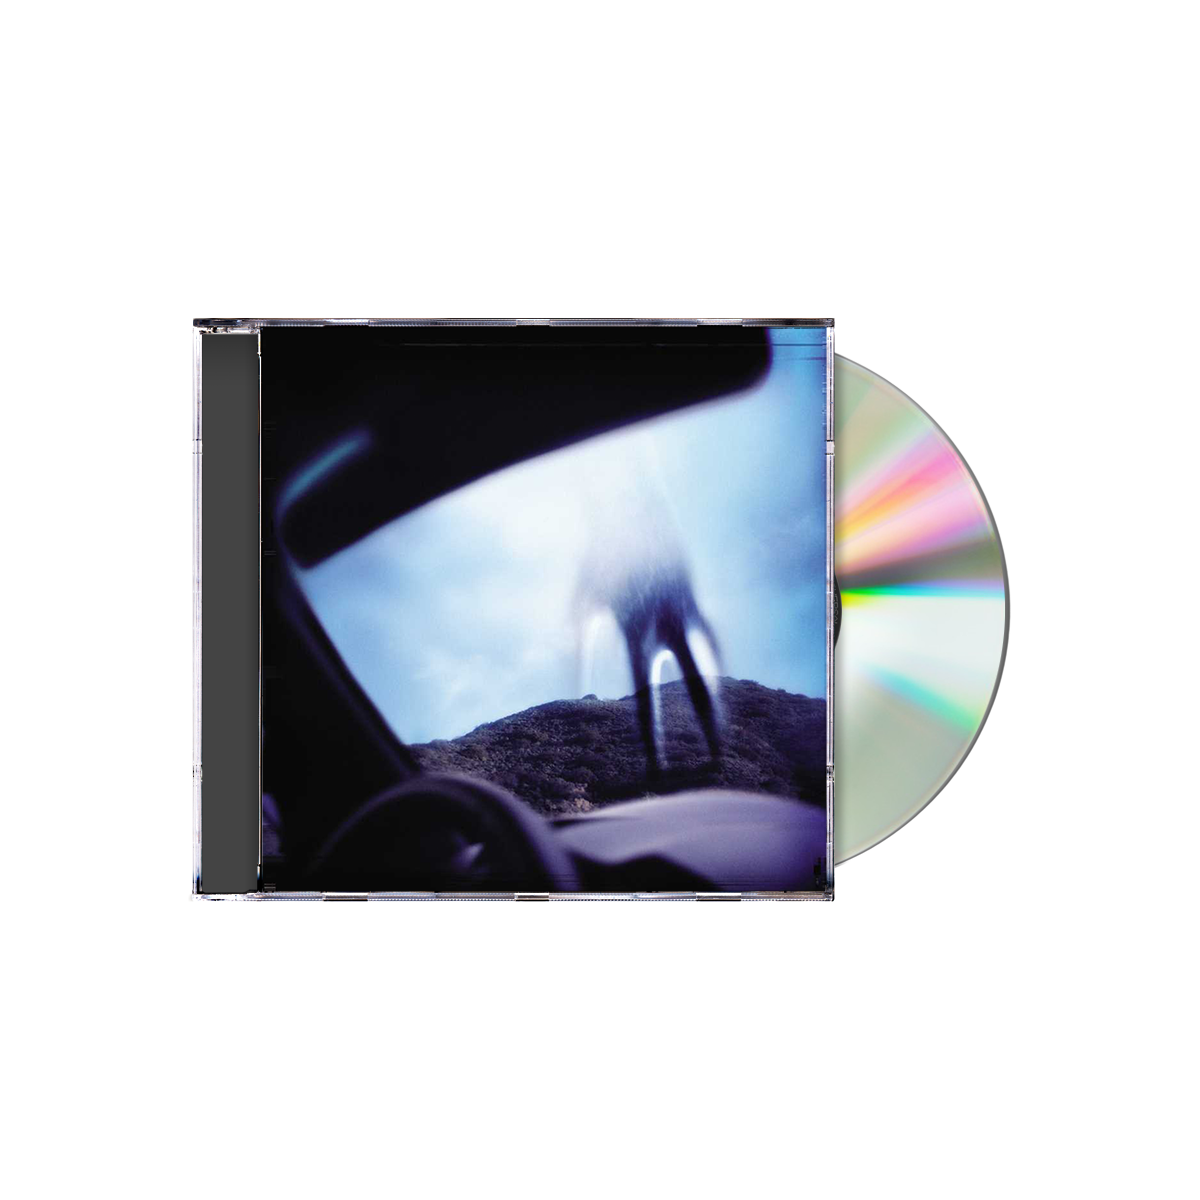 Nine Inch Nails - Year Zero [New CD] 602517301566 | eBay